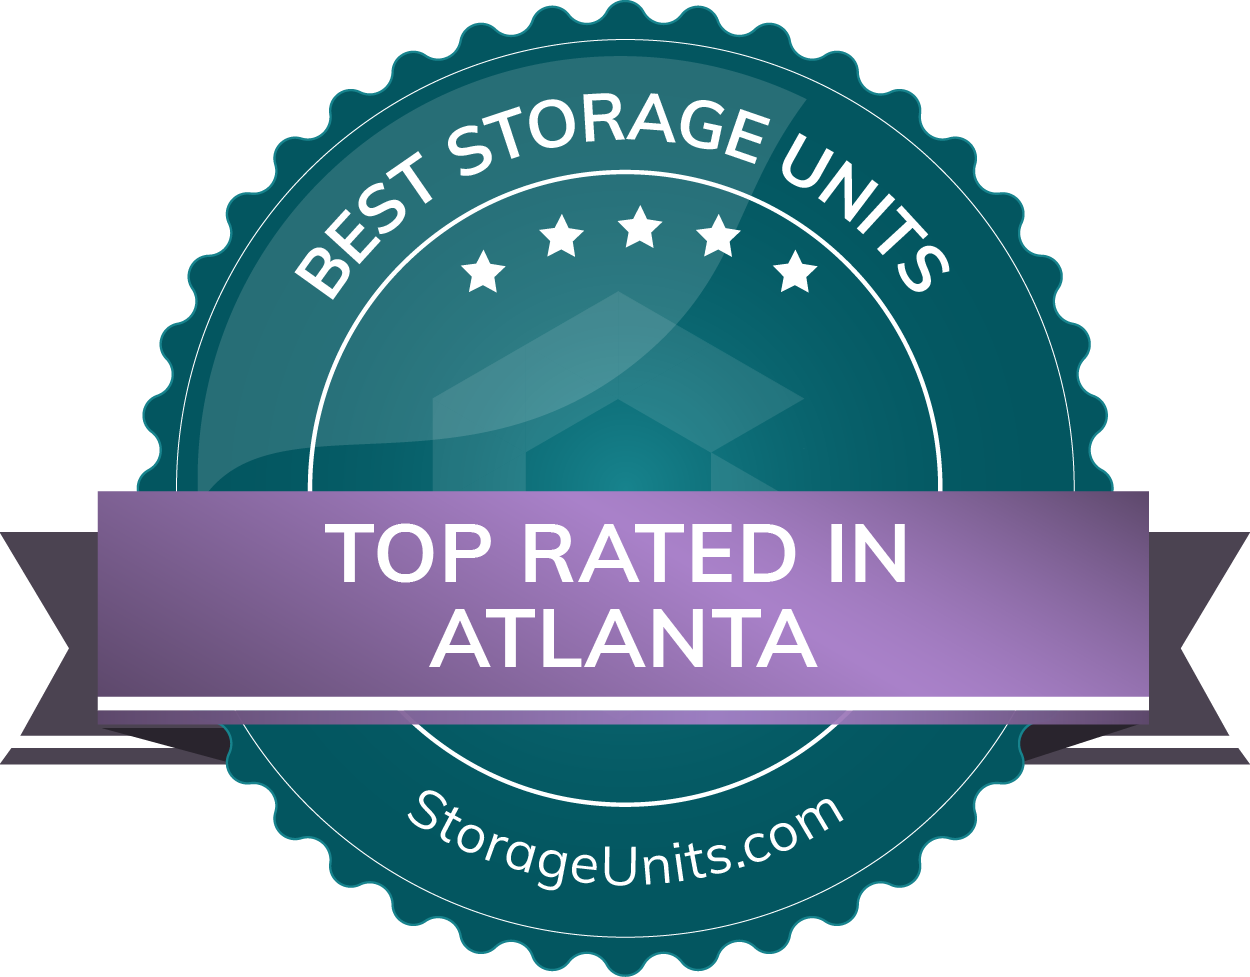 Best Self Storage Units in Atlanta, Georgia of 2022